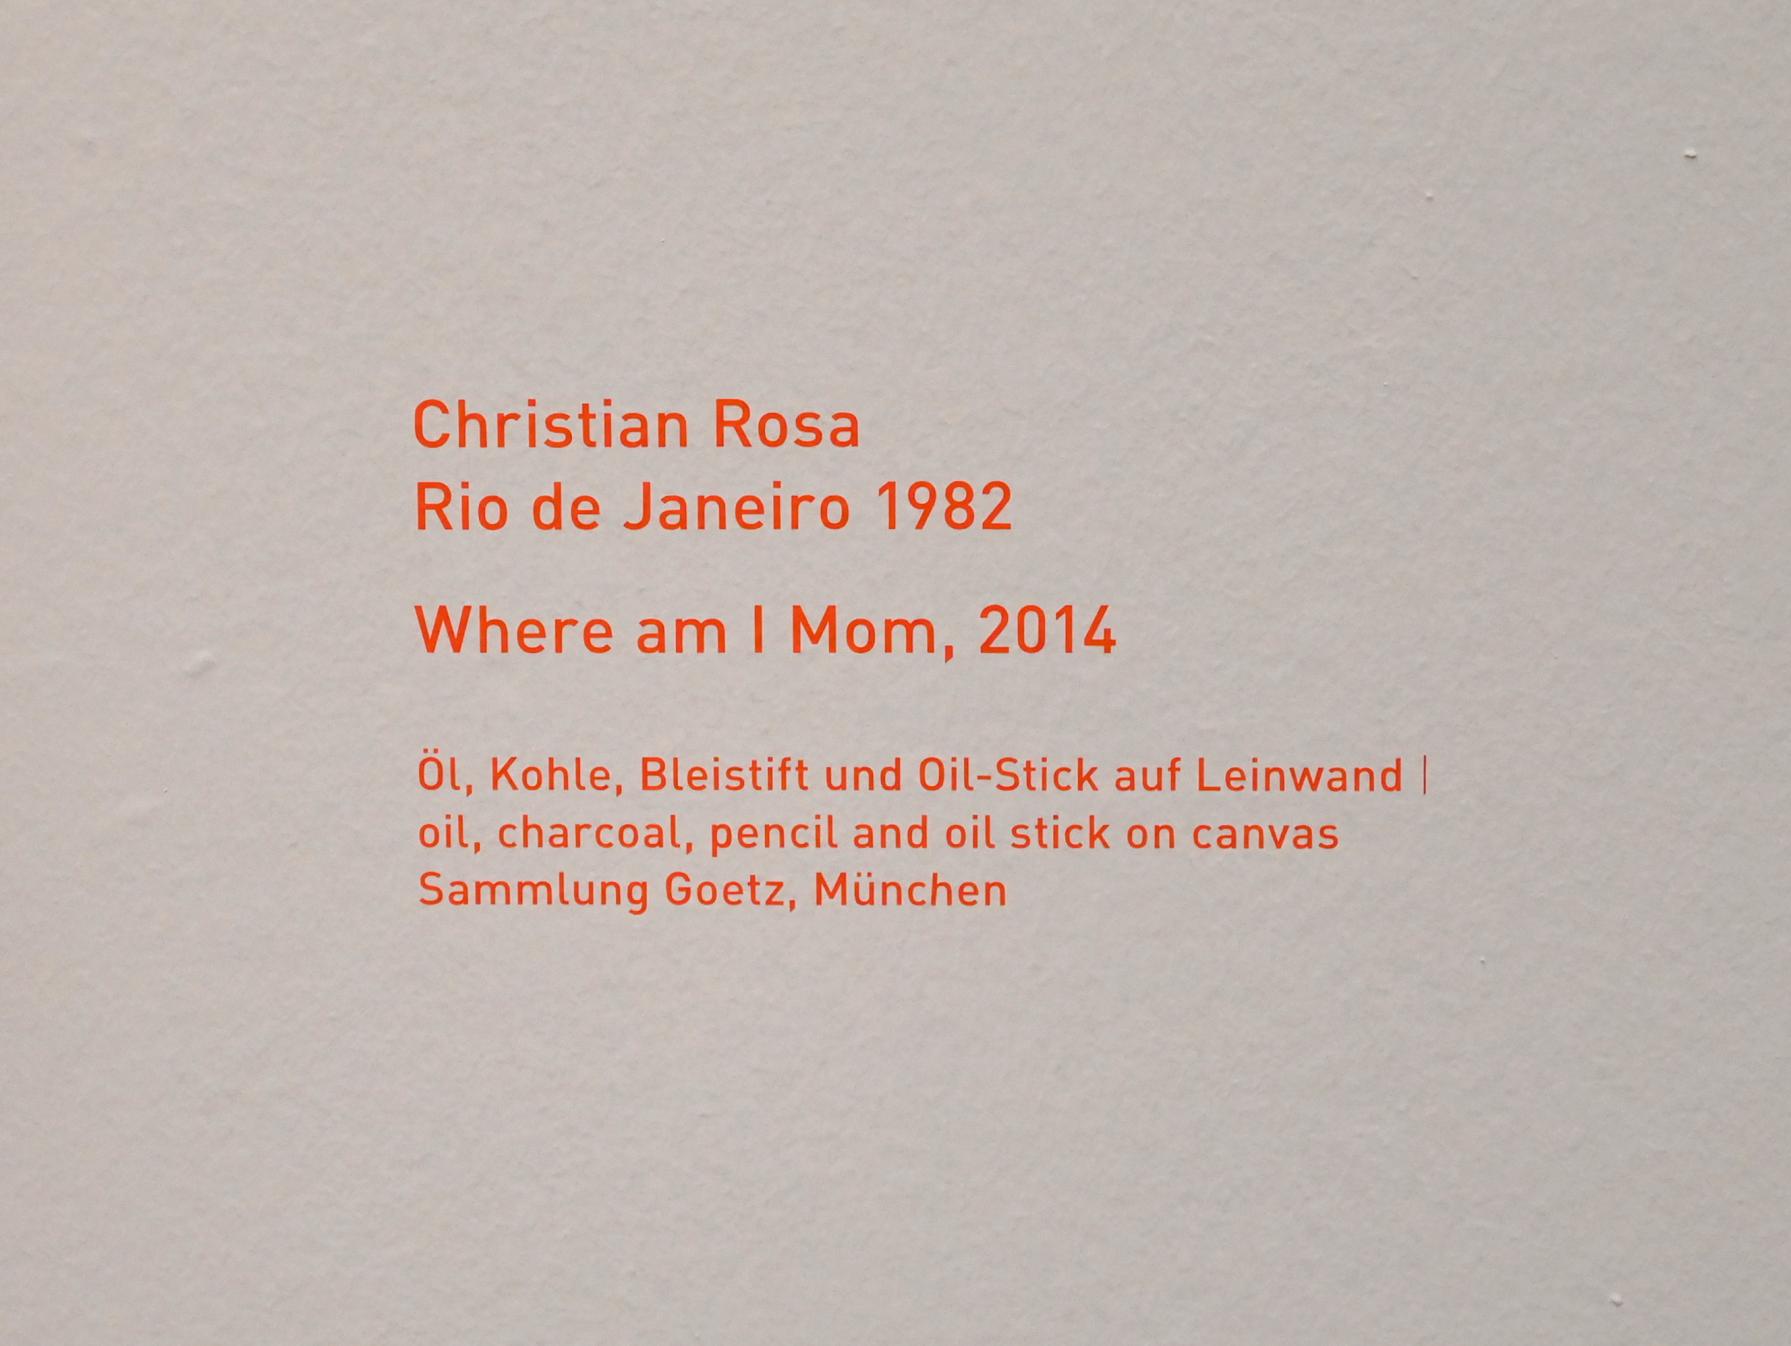 Christian Rosa (2014), Where am I Mom, München, Pinakothek der Moderne, Saal 15, 2014, Bild 2/2